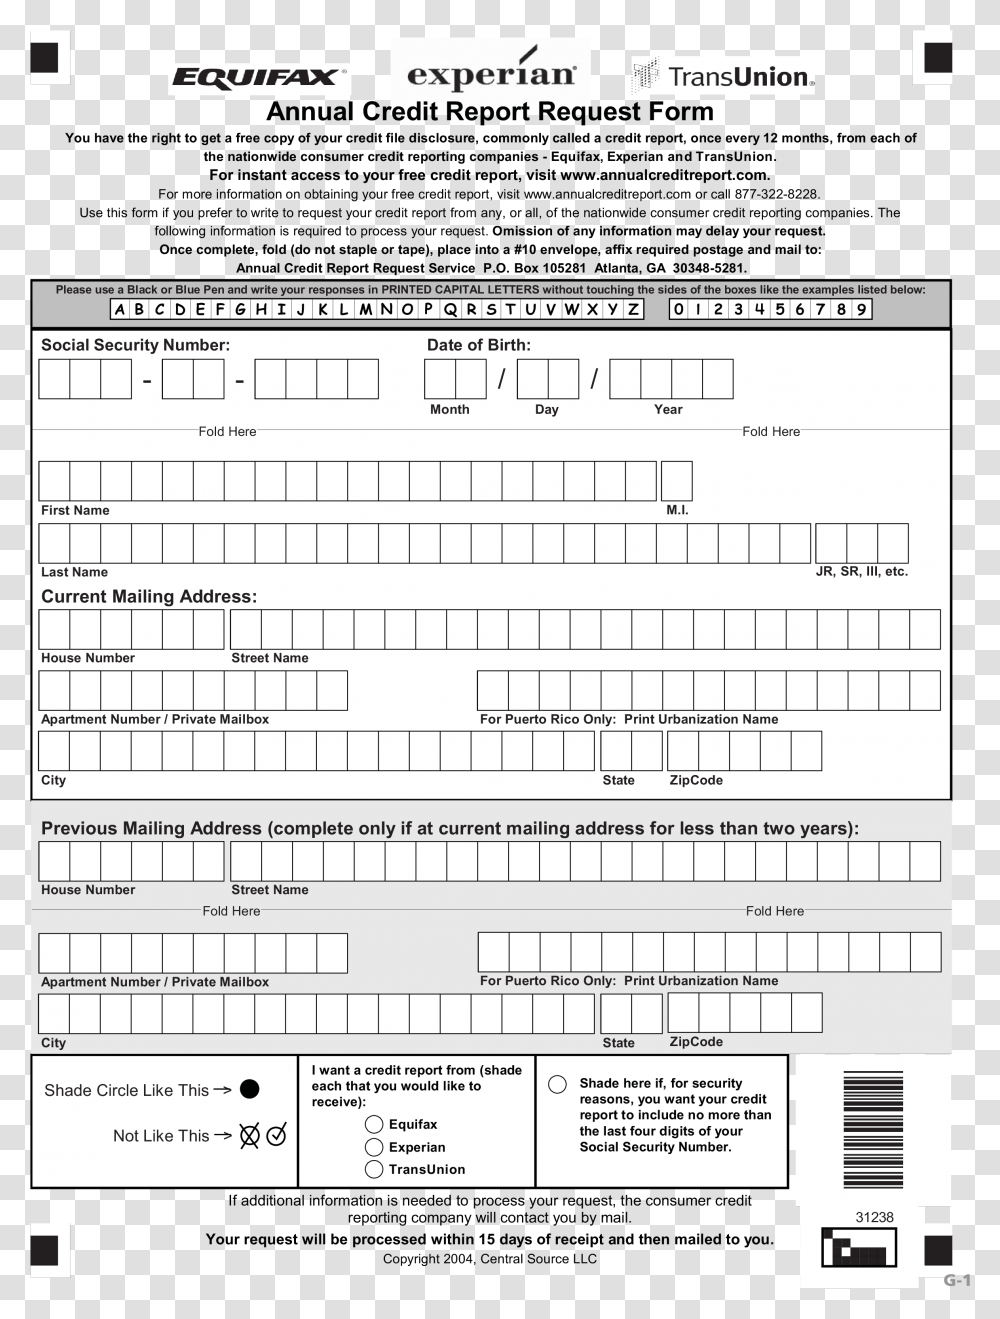 Best Annual Credit Report Request Form Main Image Equifax Manual Request Form, Plot, Plan, Diagram Transparent Png